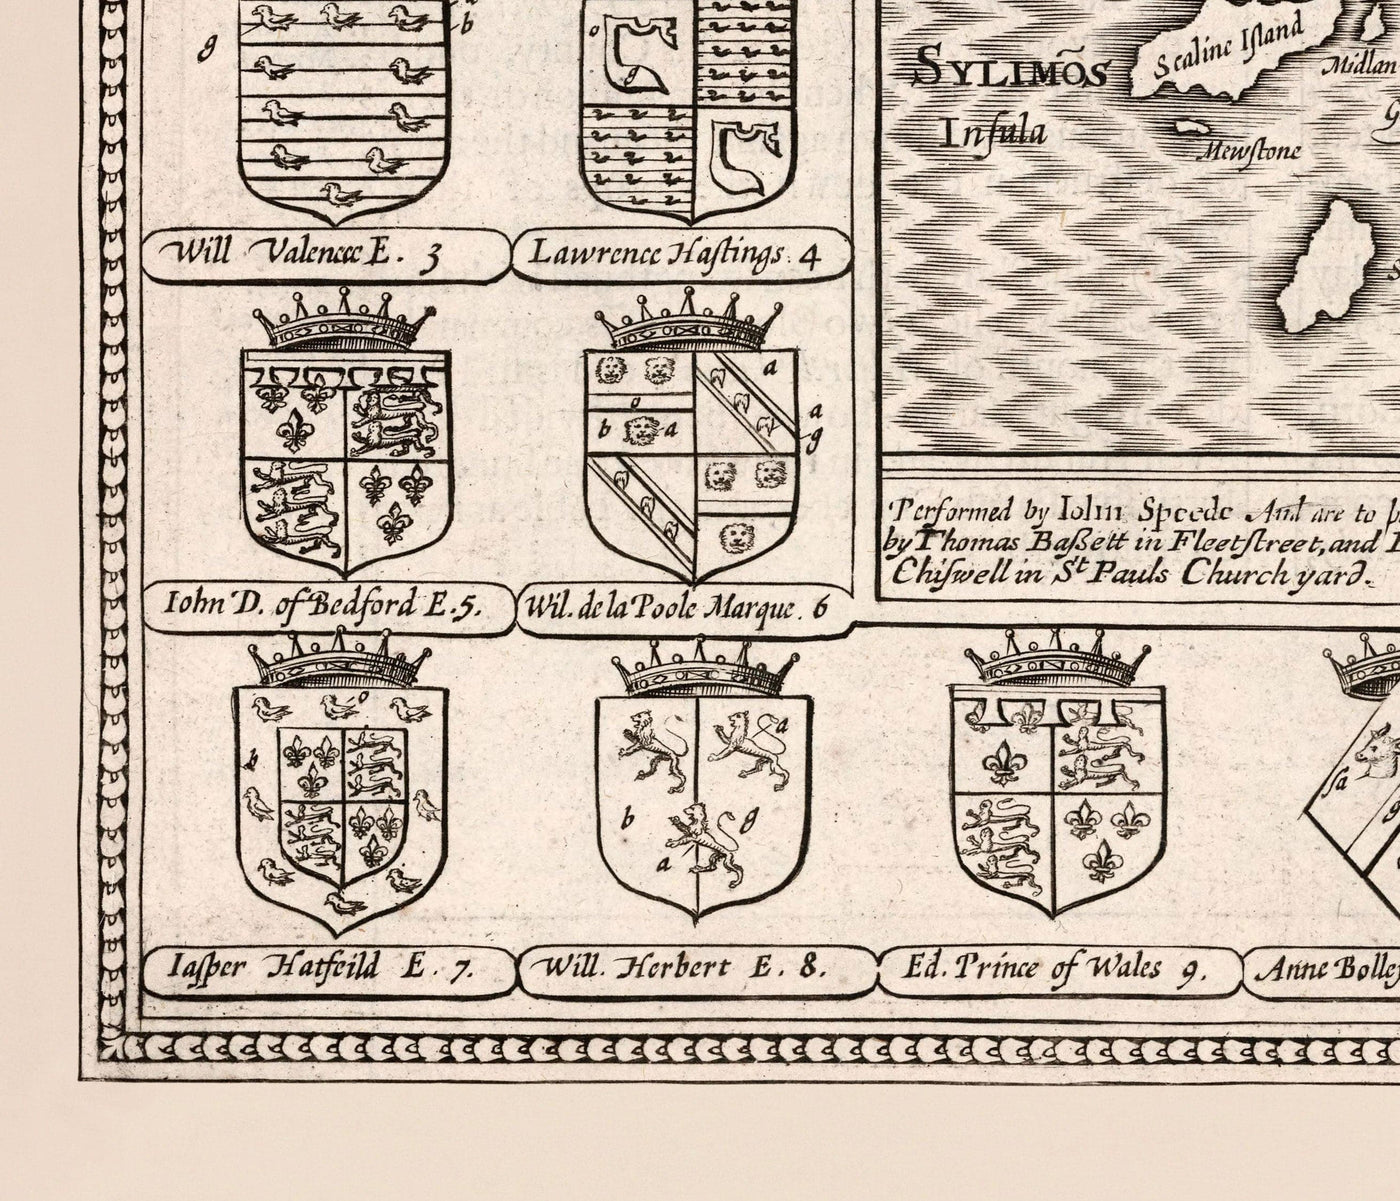 Viejo Mapa monocromo de Pembrokeshire, Gales 1611 John Speed ​​- Haverfordwest, St Davids, FishGuard, Southwest